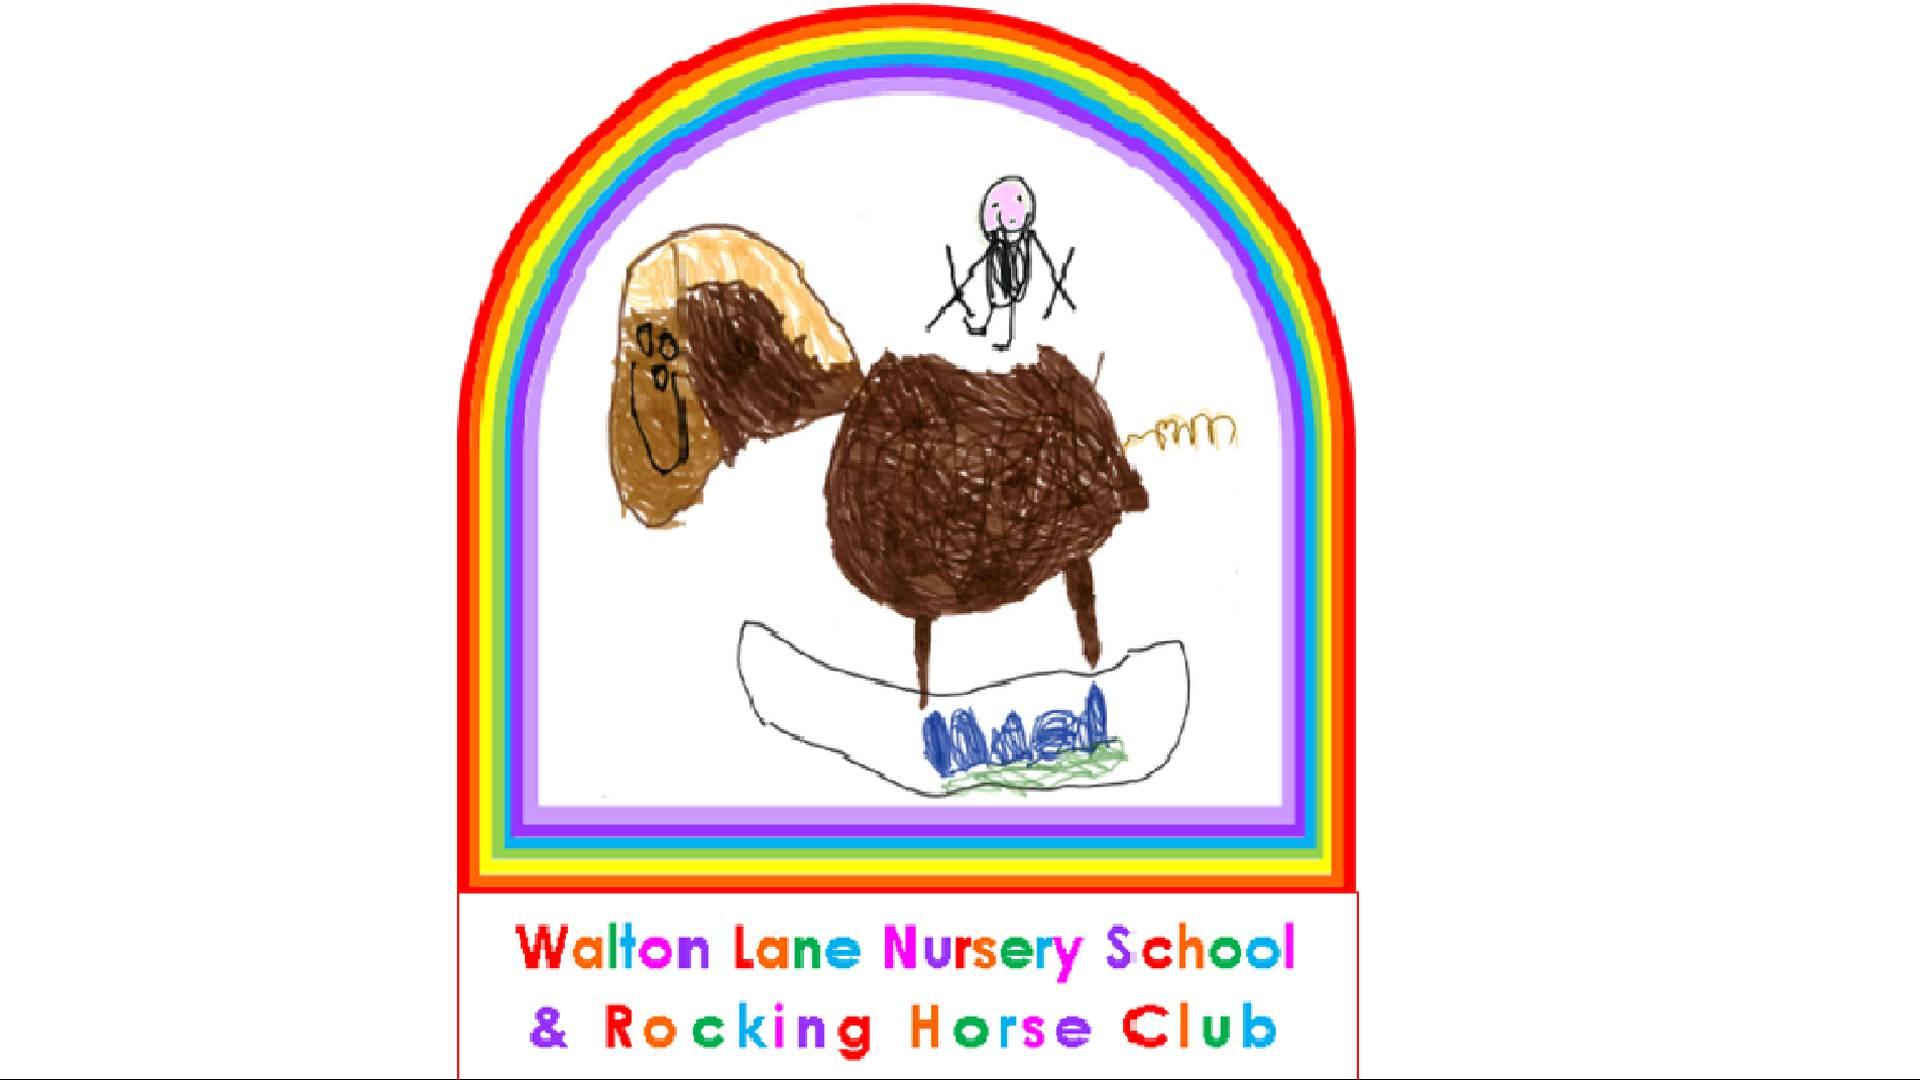 Walton Lane Nursery School and Rocking Horse Club photo